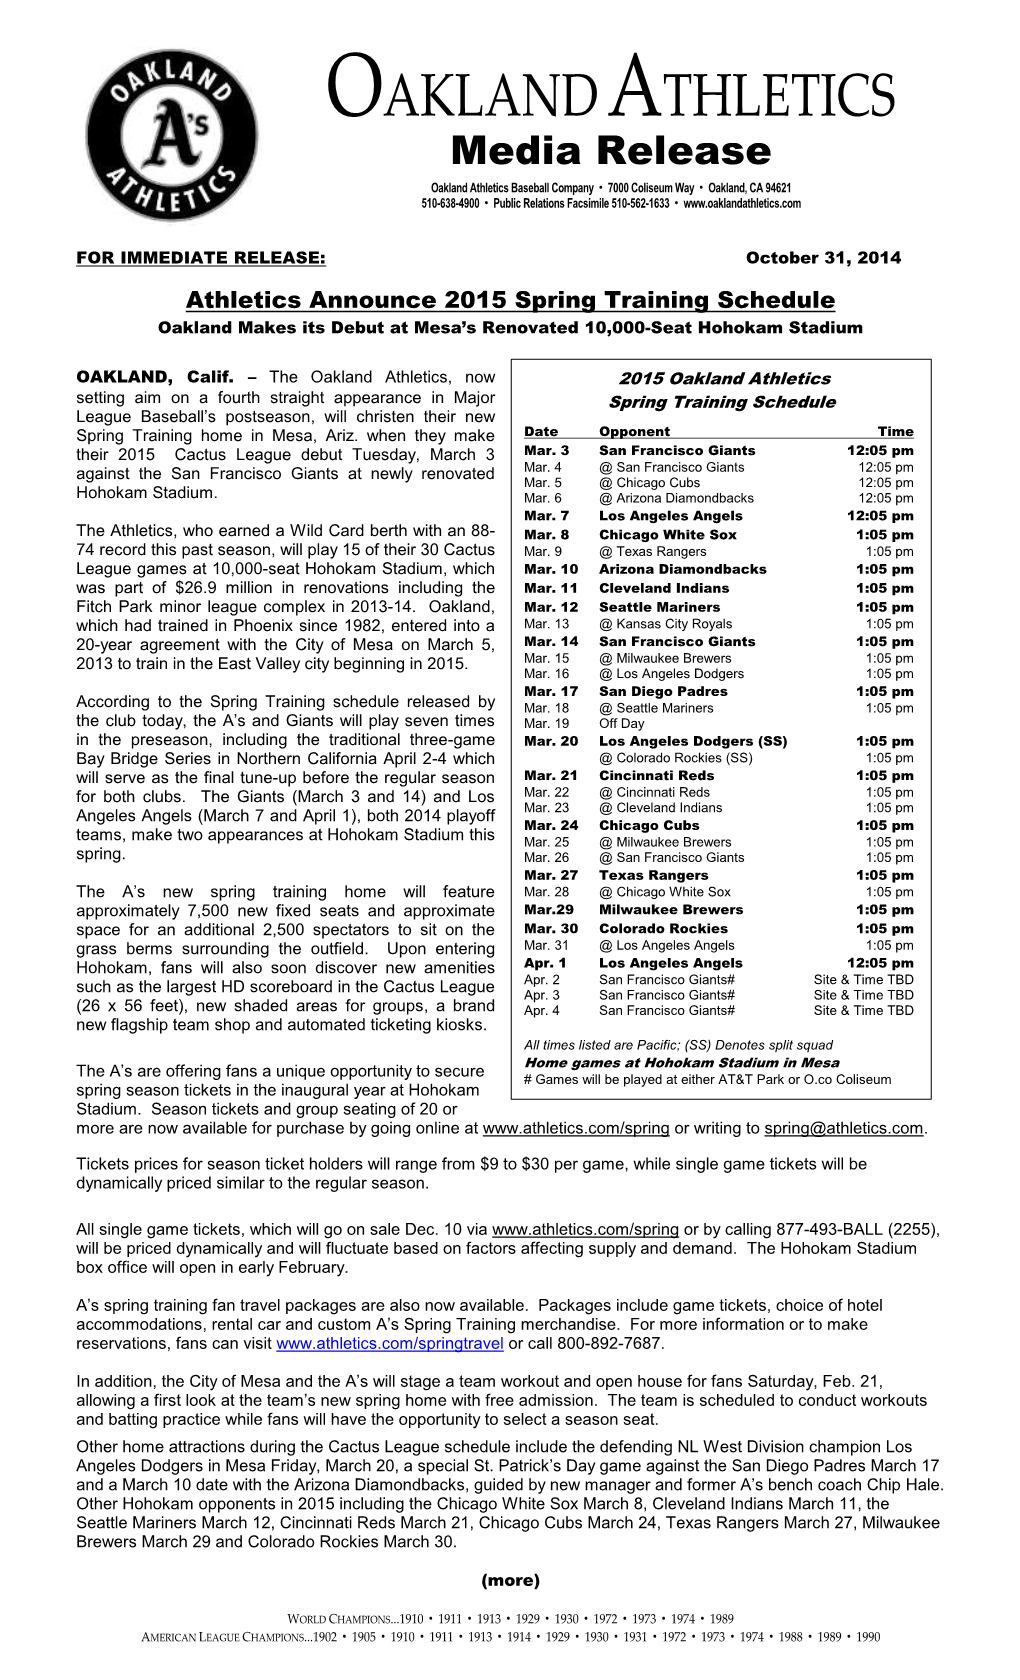 10-31-2014 Athletics Announce Spring Schedule